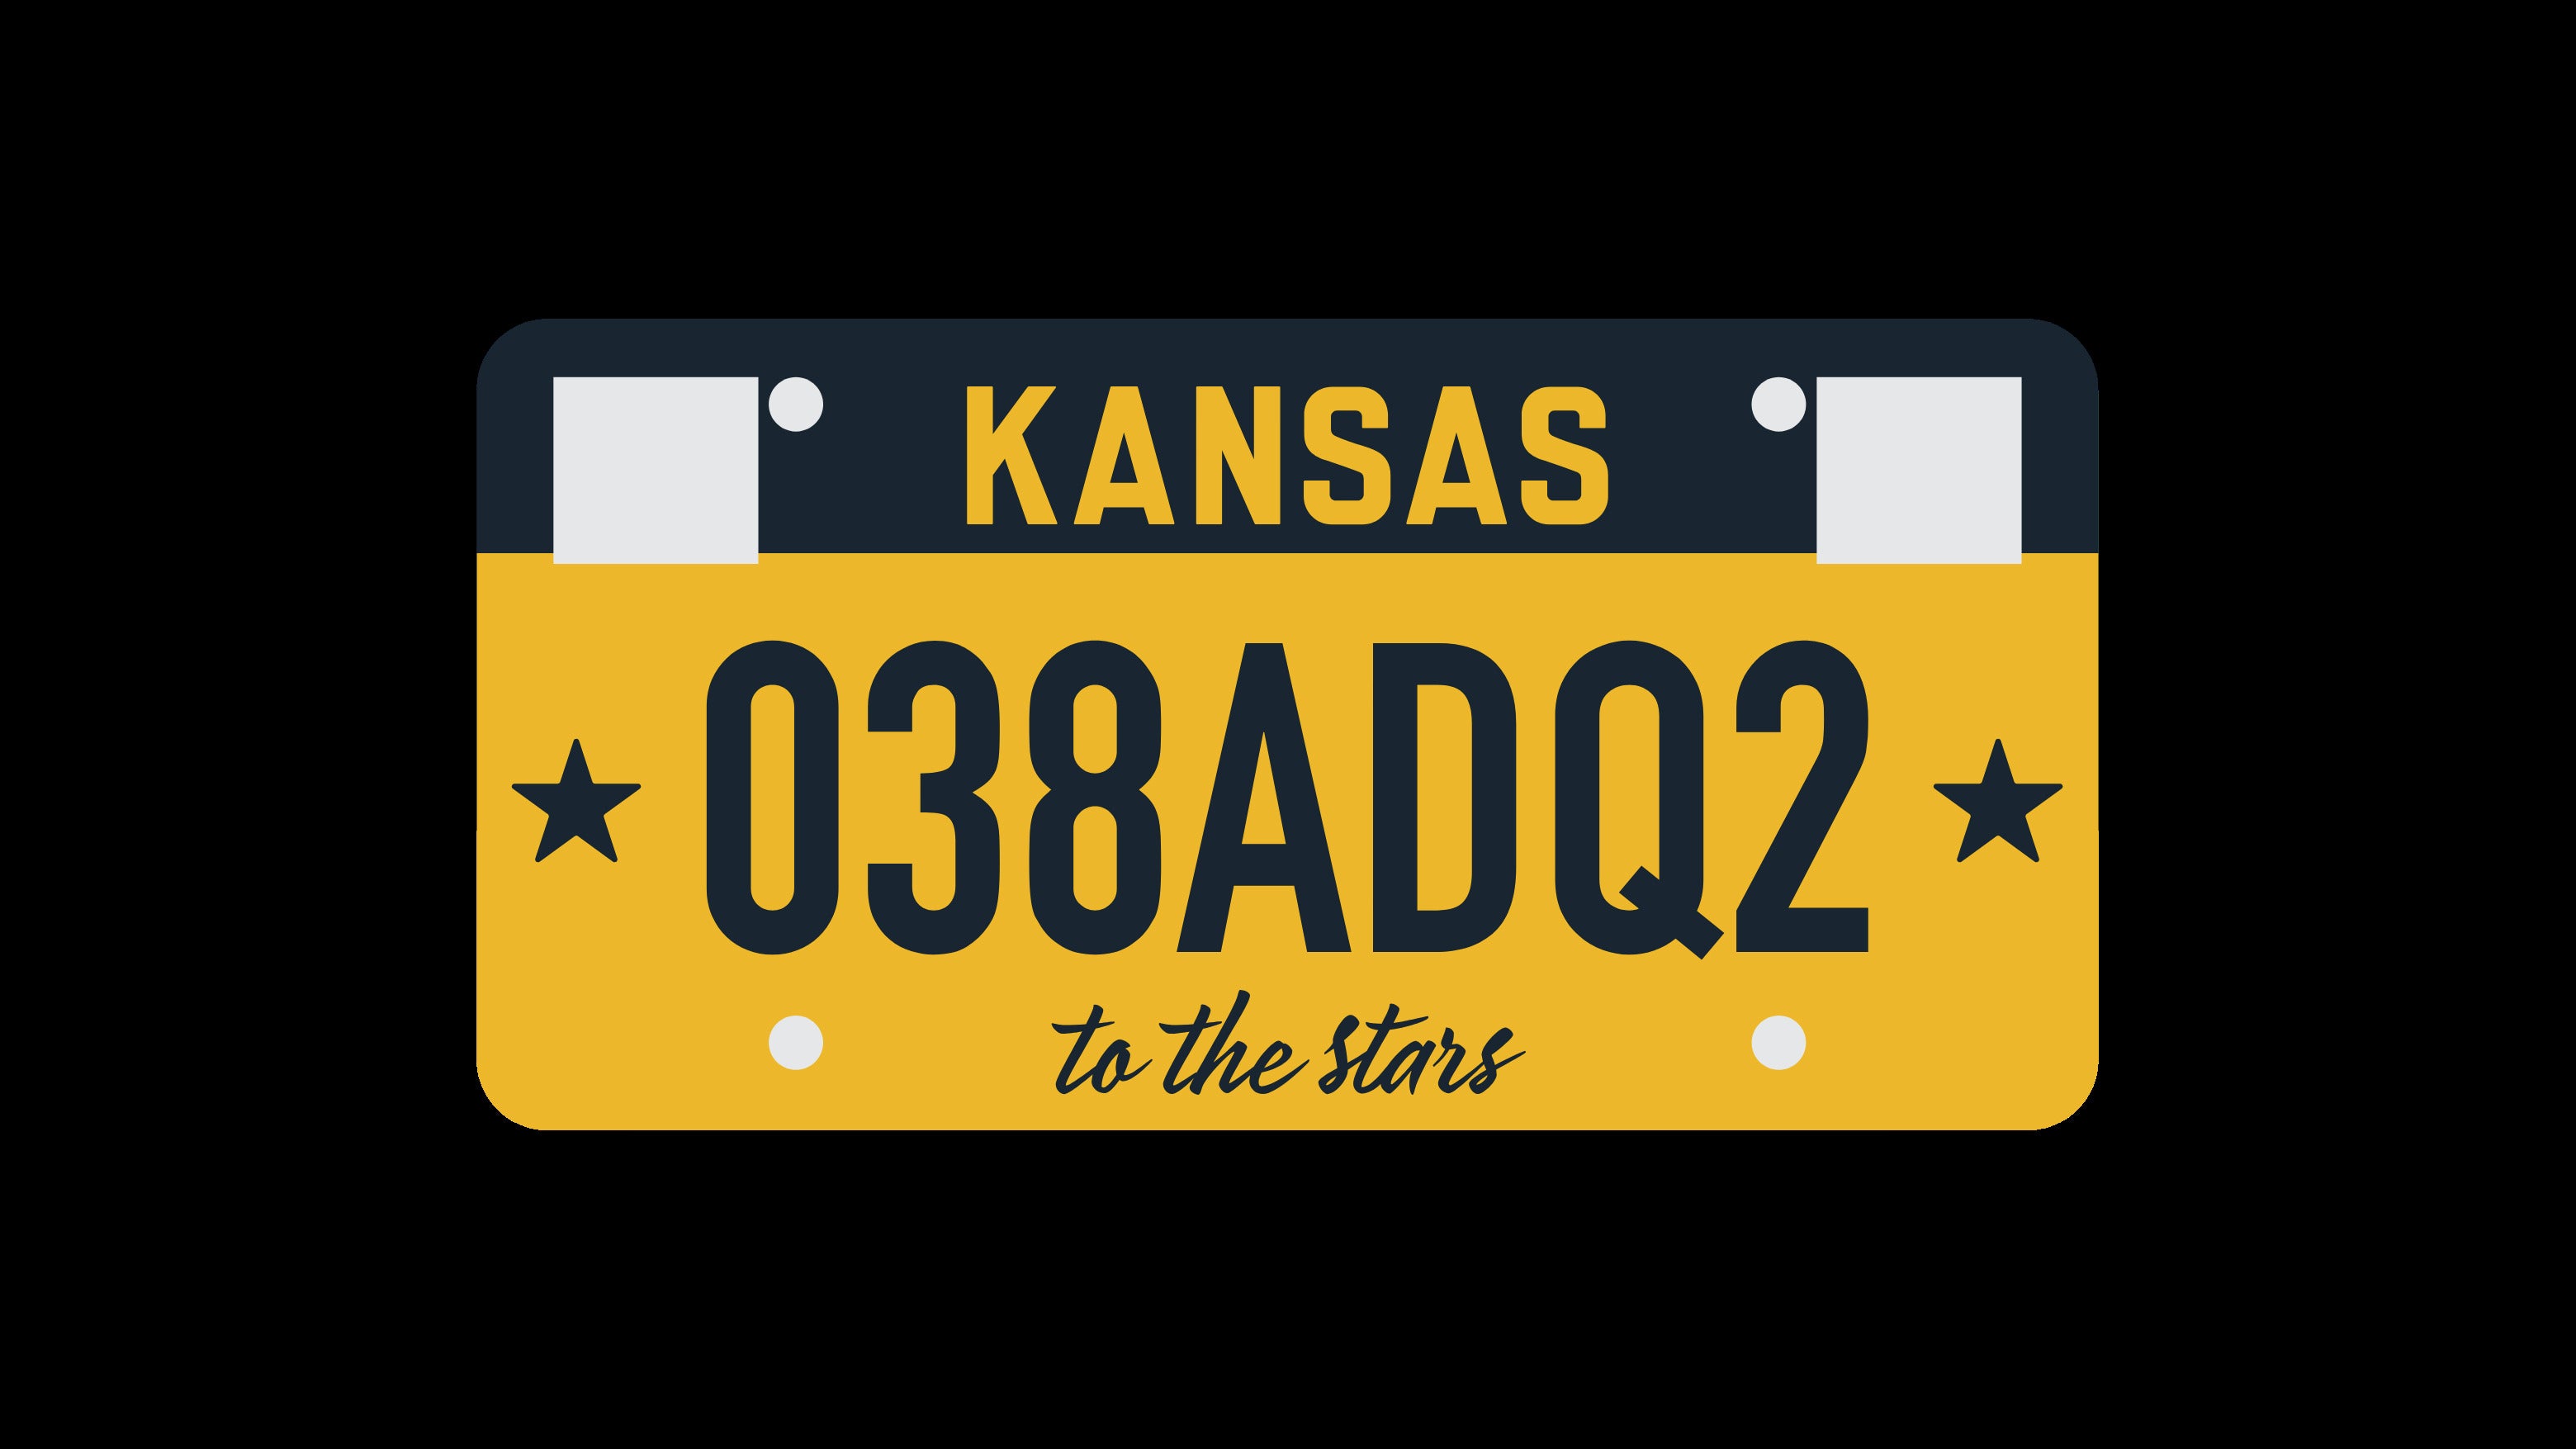 Kansas License Plate Fuss